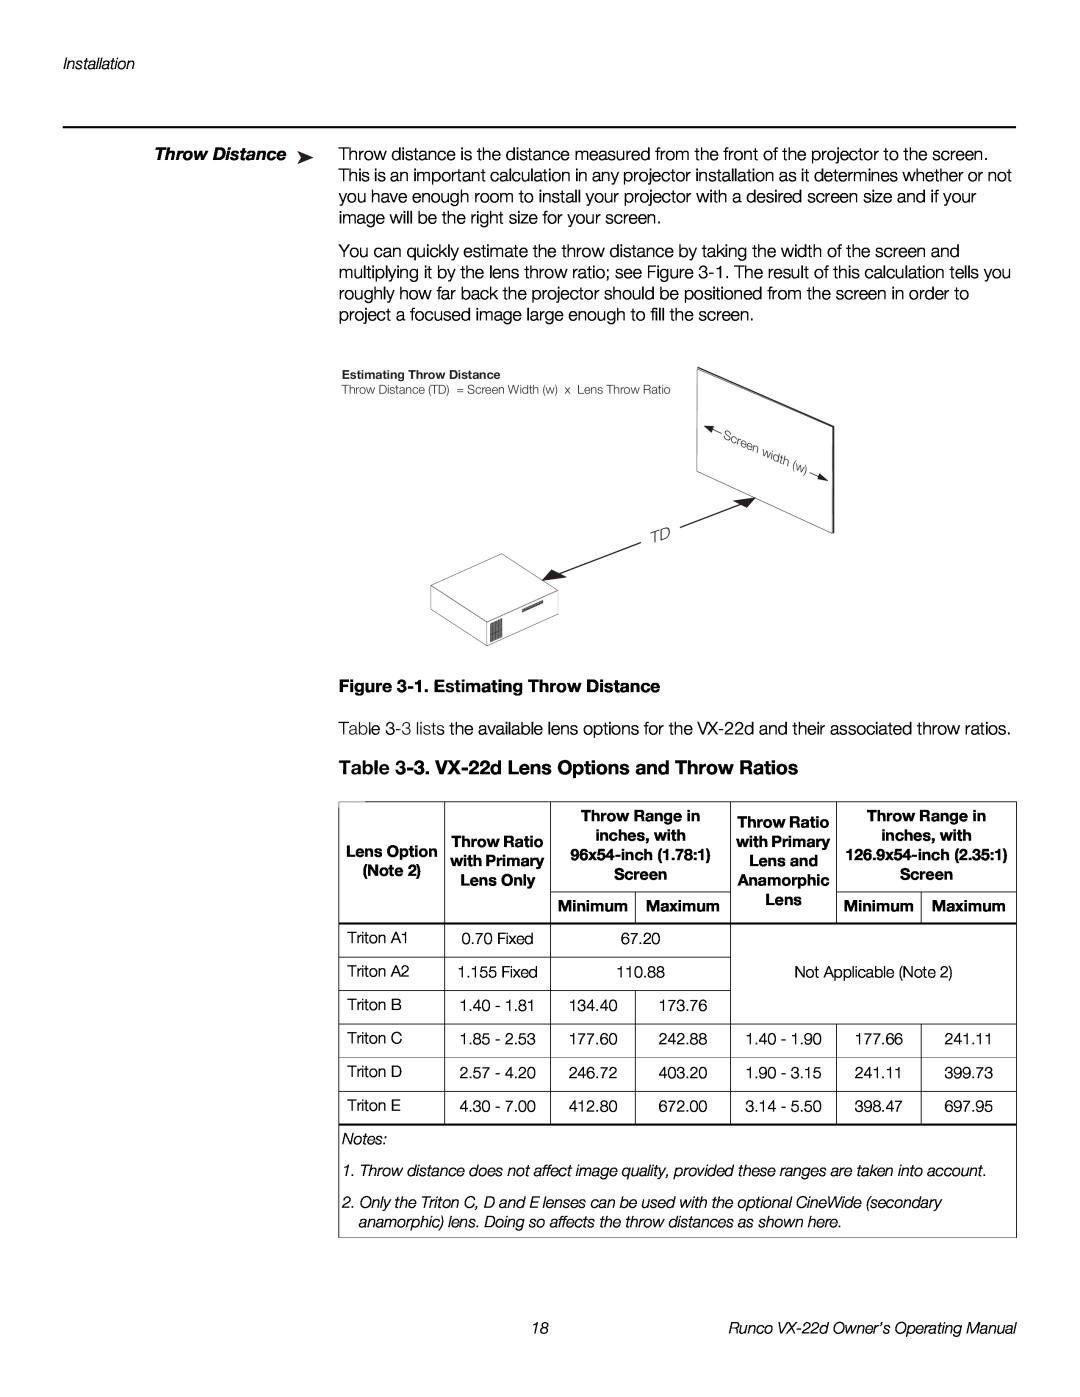 Runco VX-22D manual 3. VX-22d Lens Options and Throw Ratios, 1. Estimating Throw Distance 